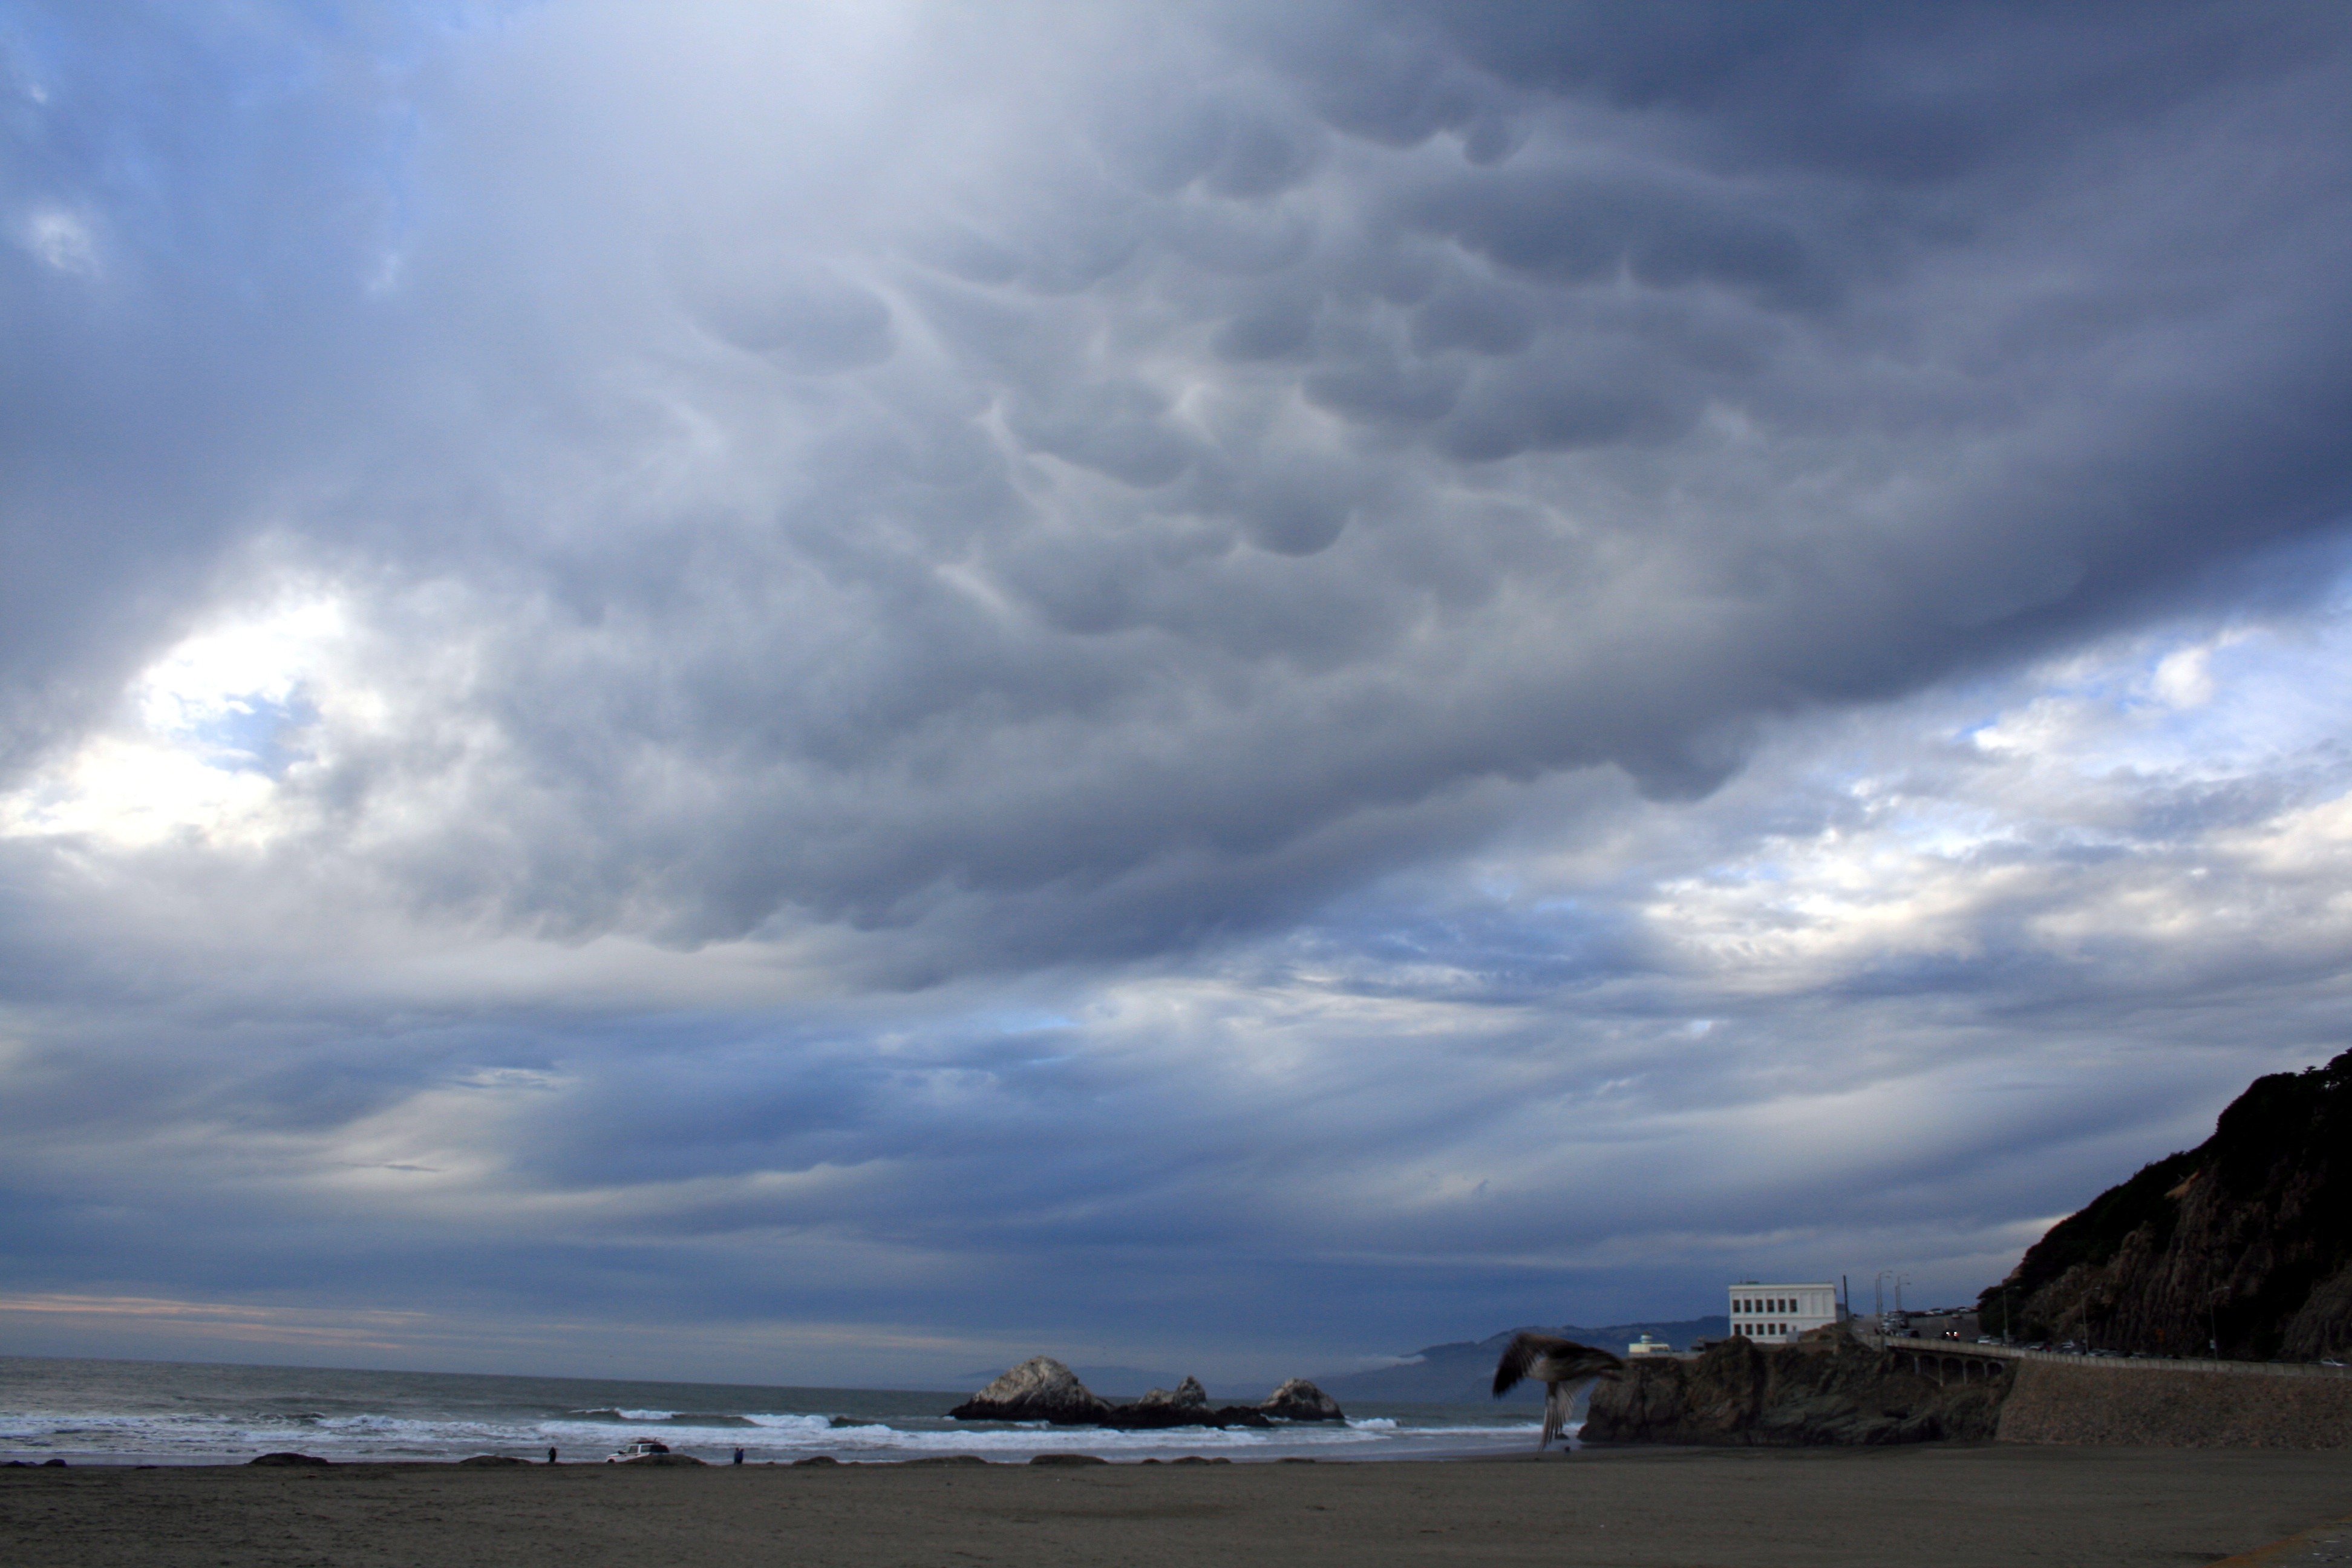 File:Mammatus clouds over San Francisco Bay.JPG - Wikimedia Commons